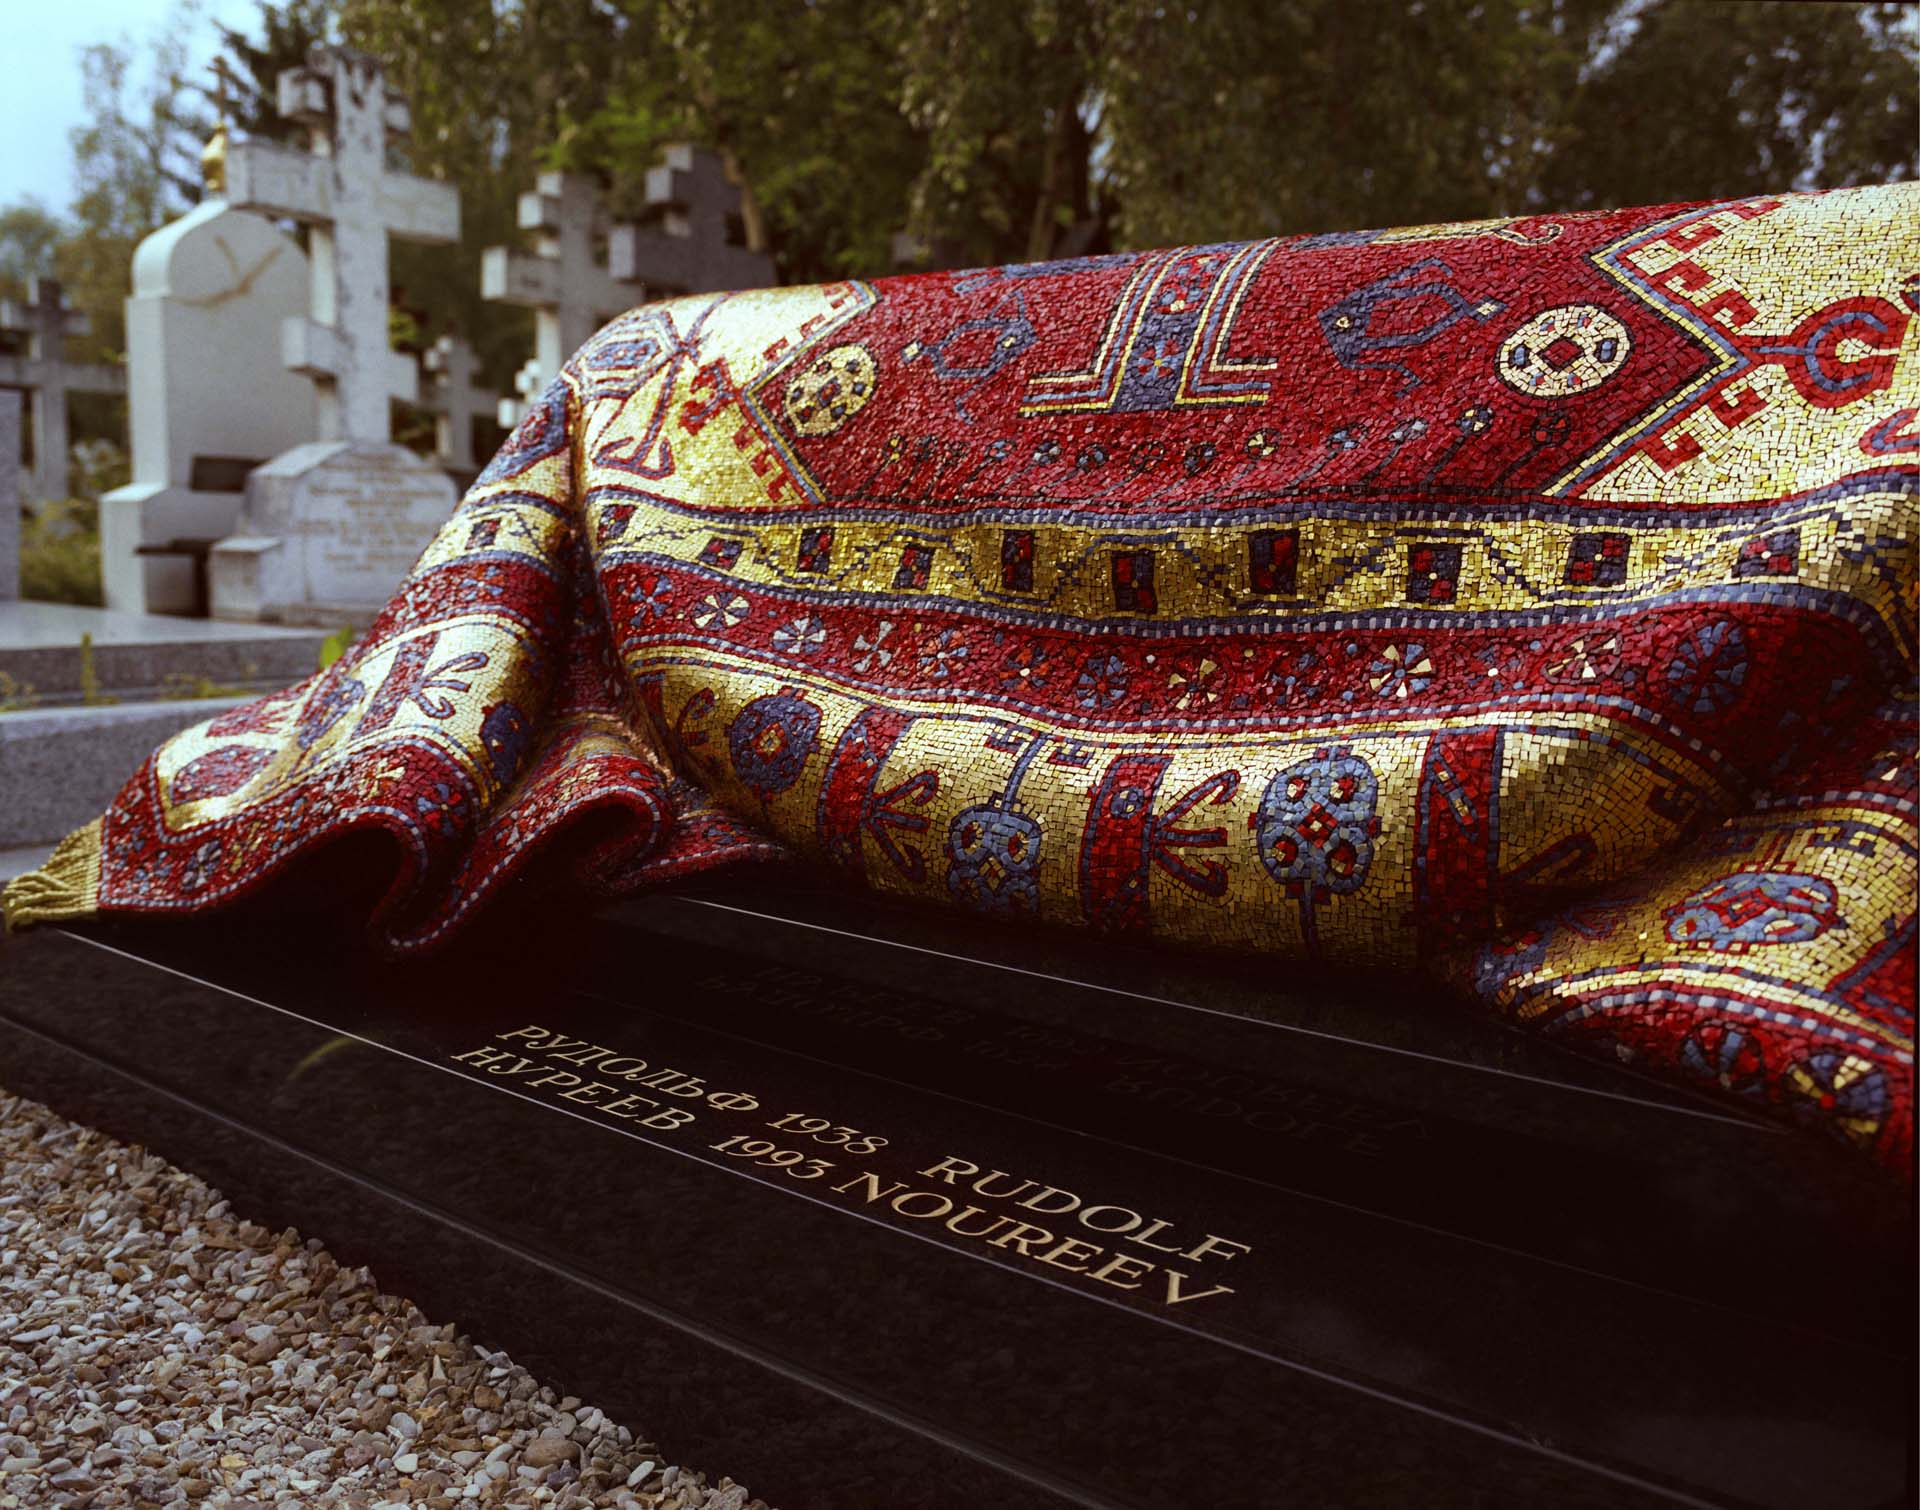 La tomba di Rudolf Nureyev